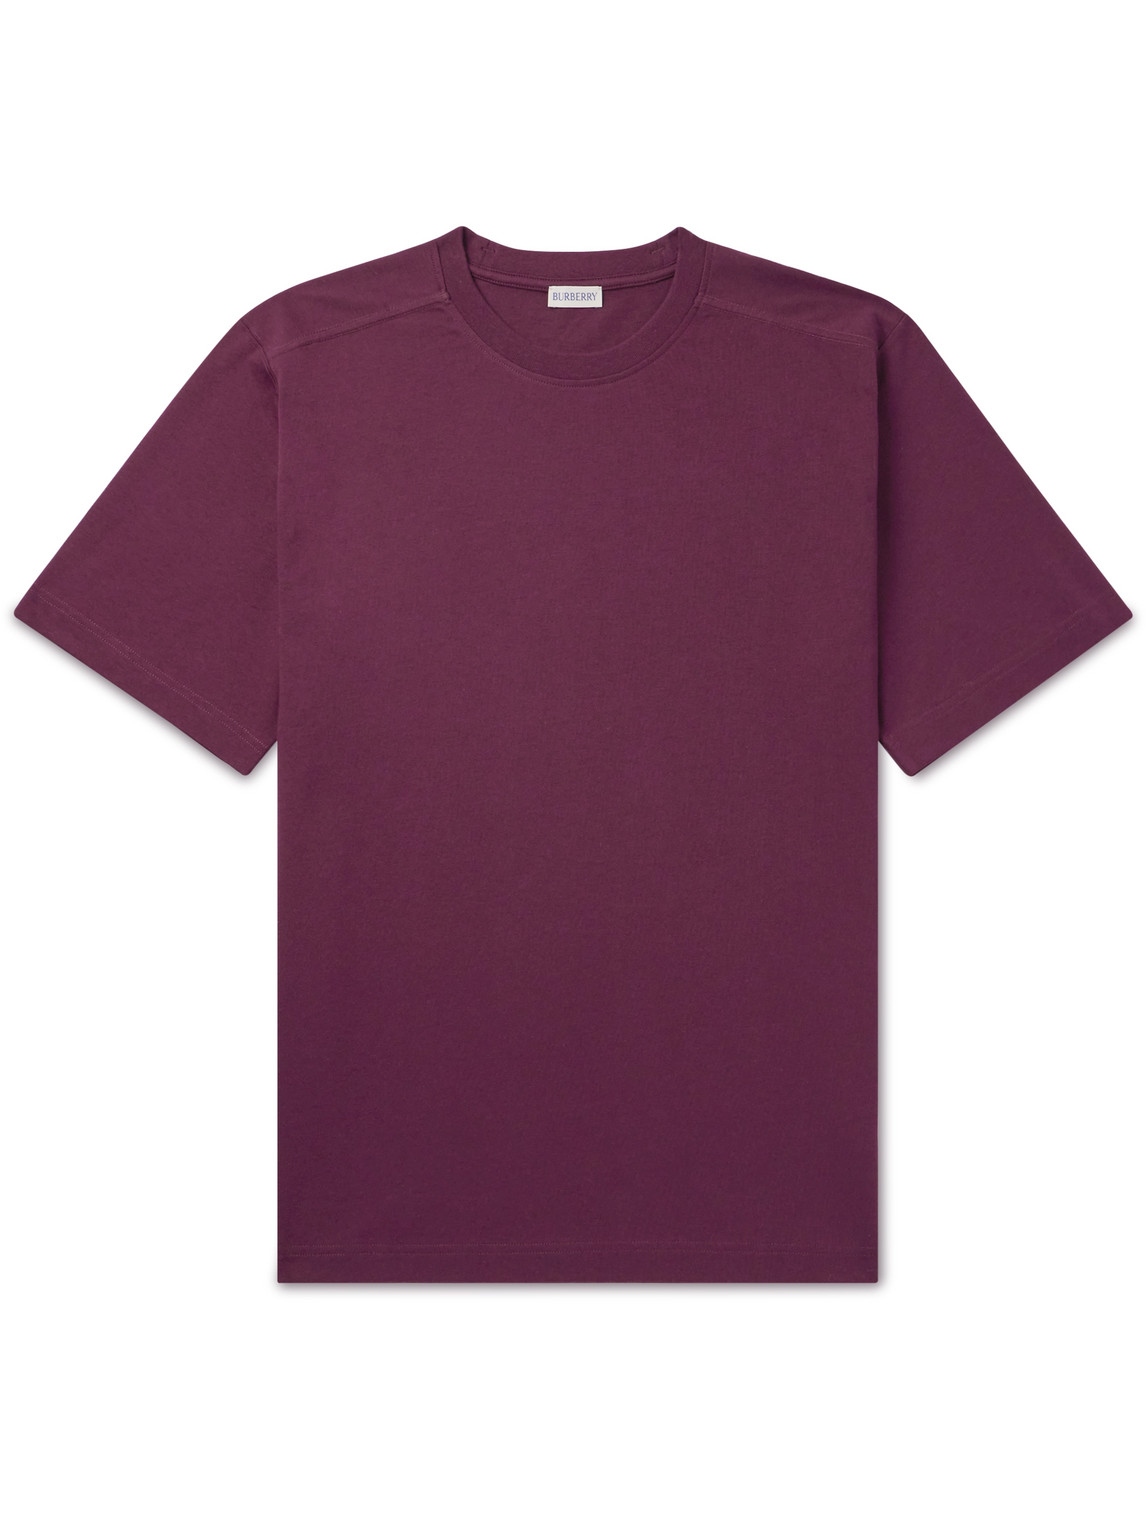 Burberry - Logo-Embroidered Cotton-Jersey T-Shirt - Men - Purple - M von Burberry